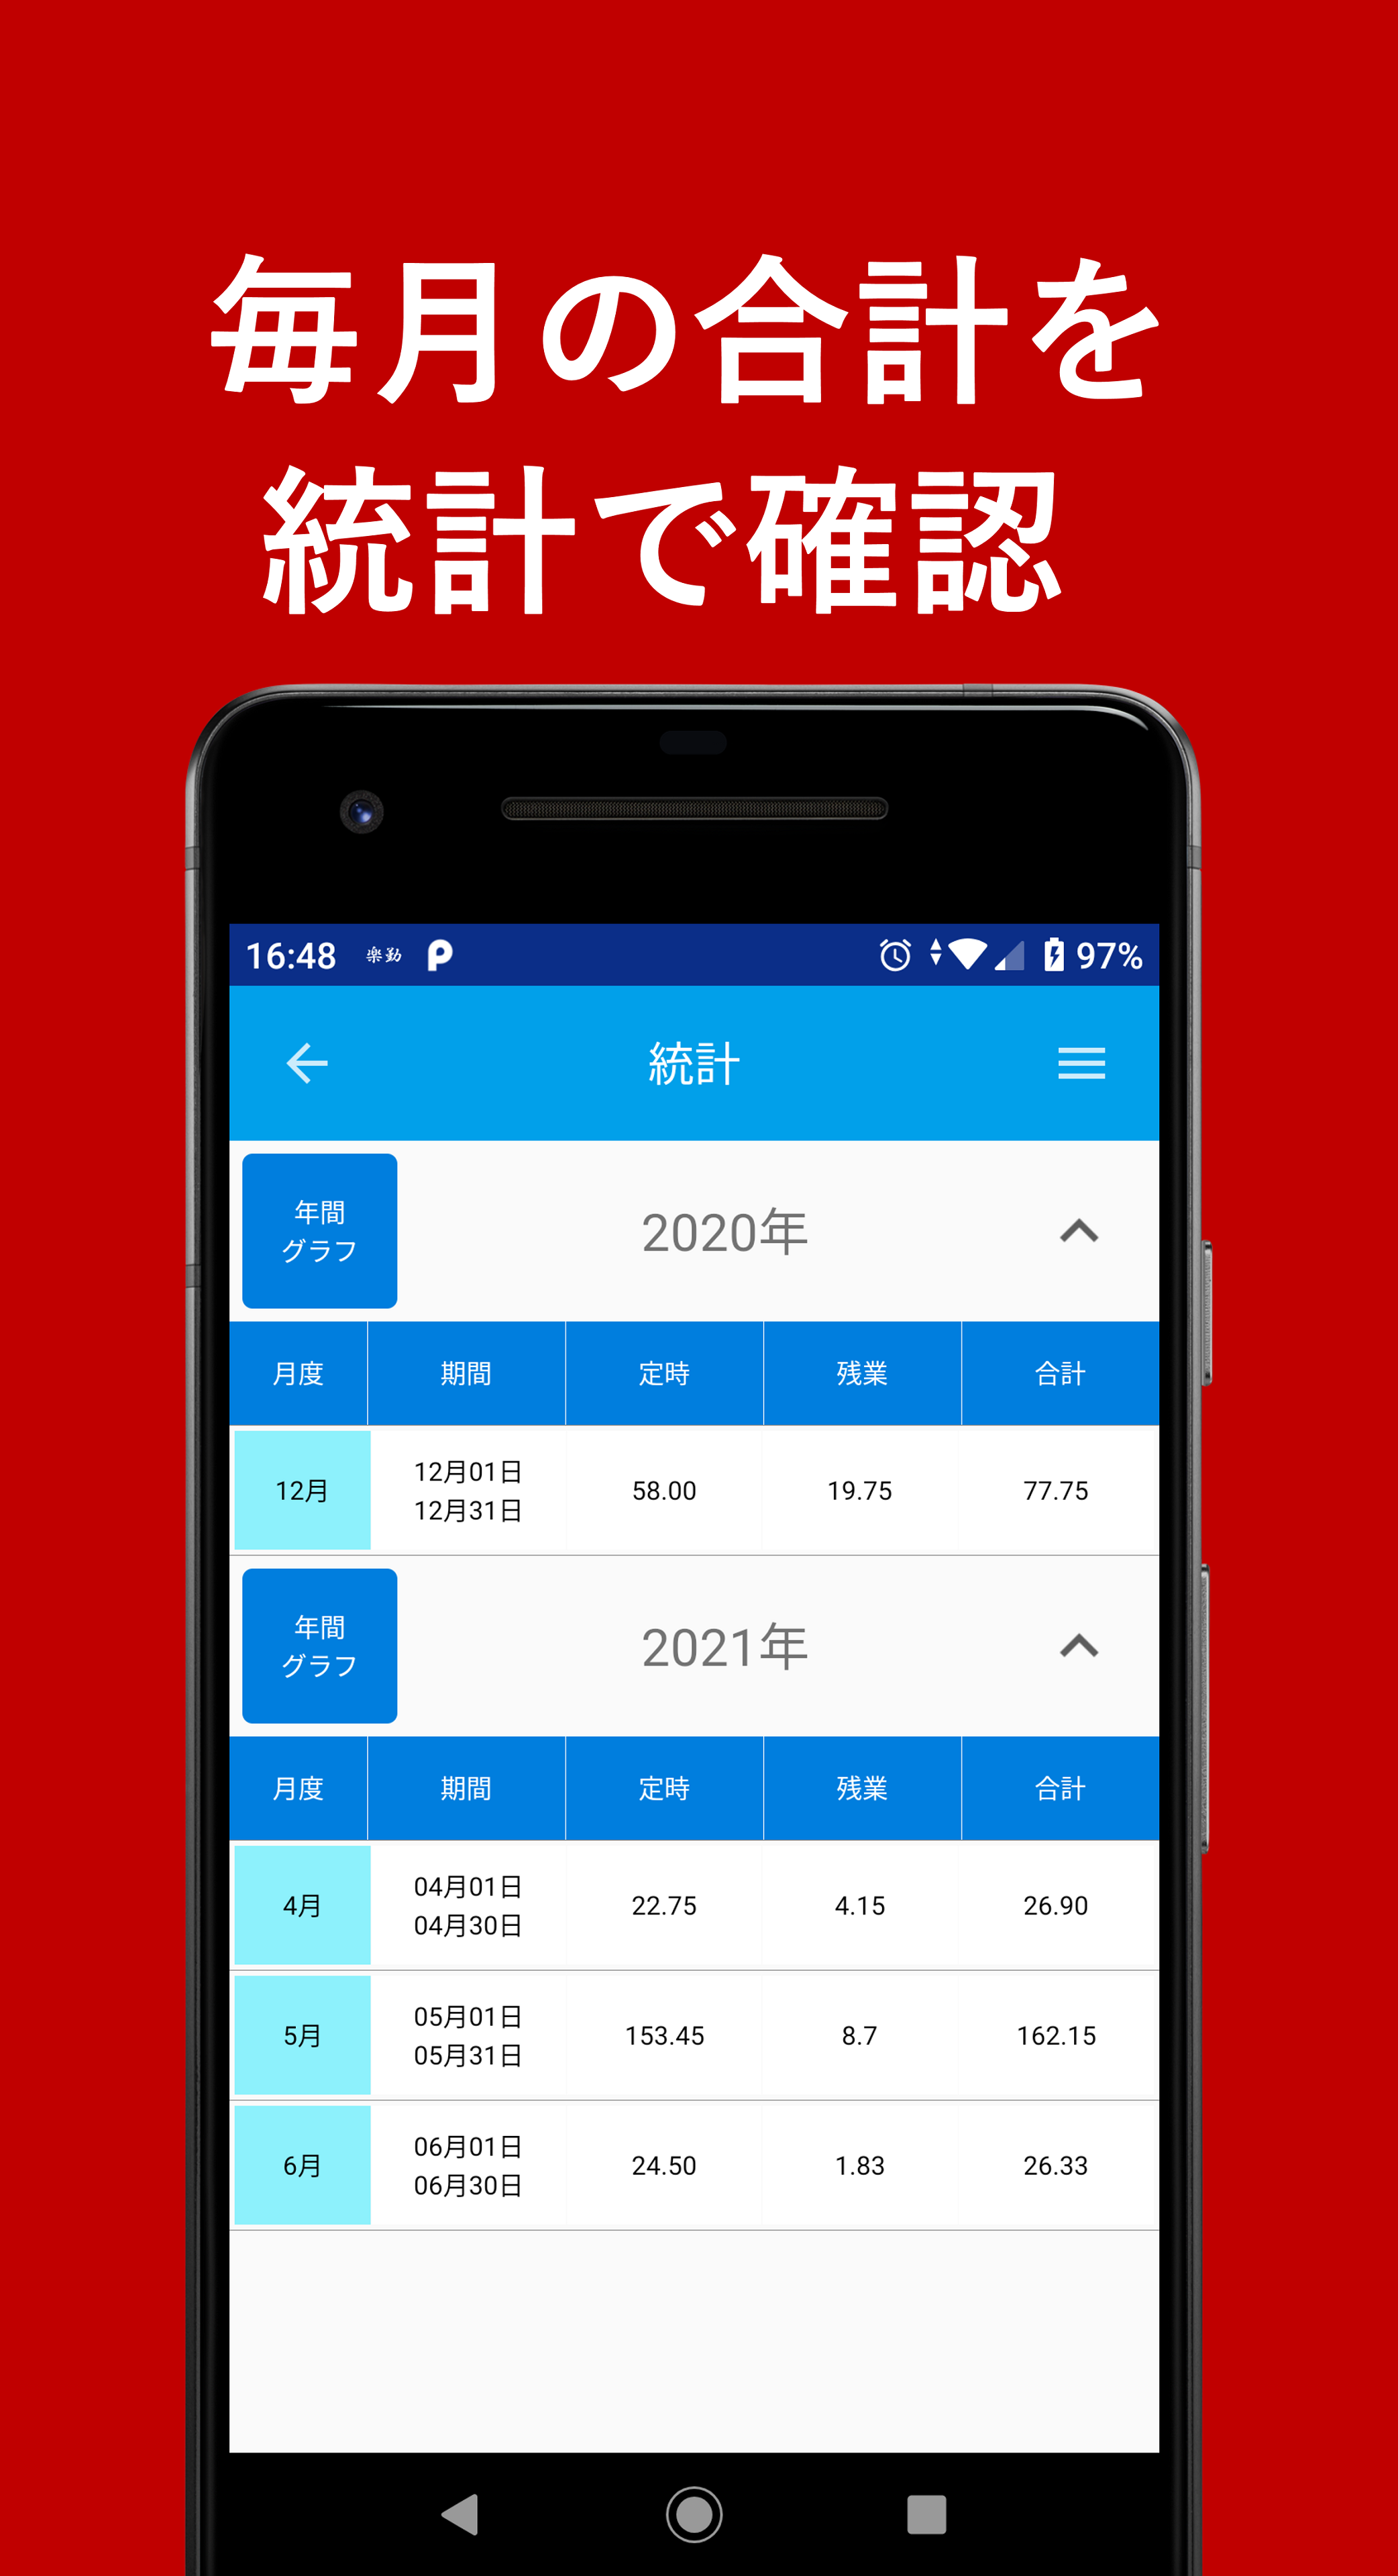 Android application らくらく勤怠 (勤務表, タイムカード) screenshort